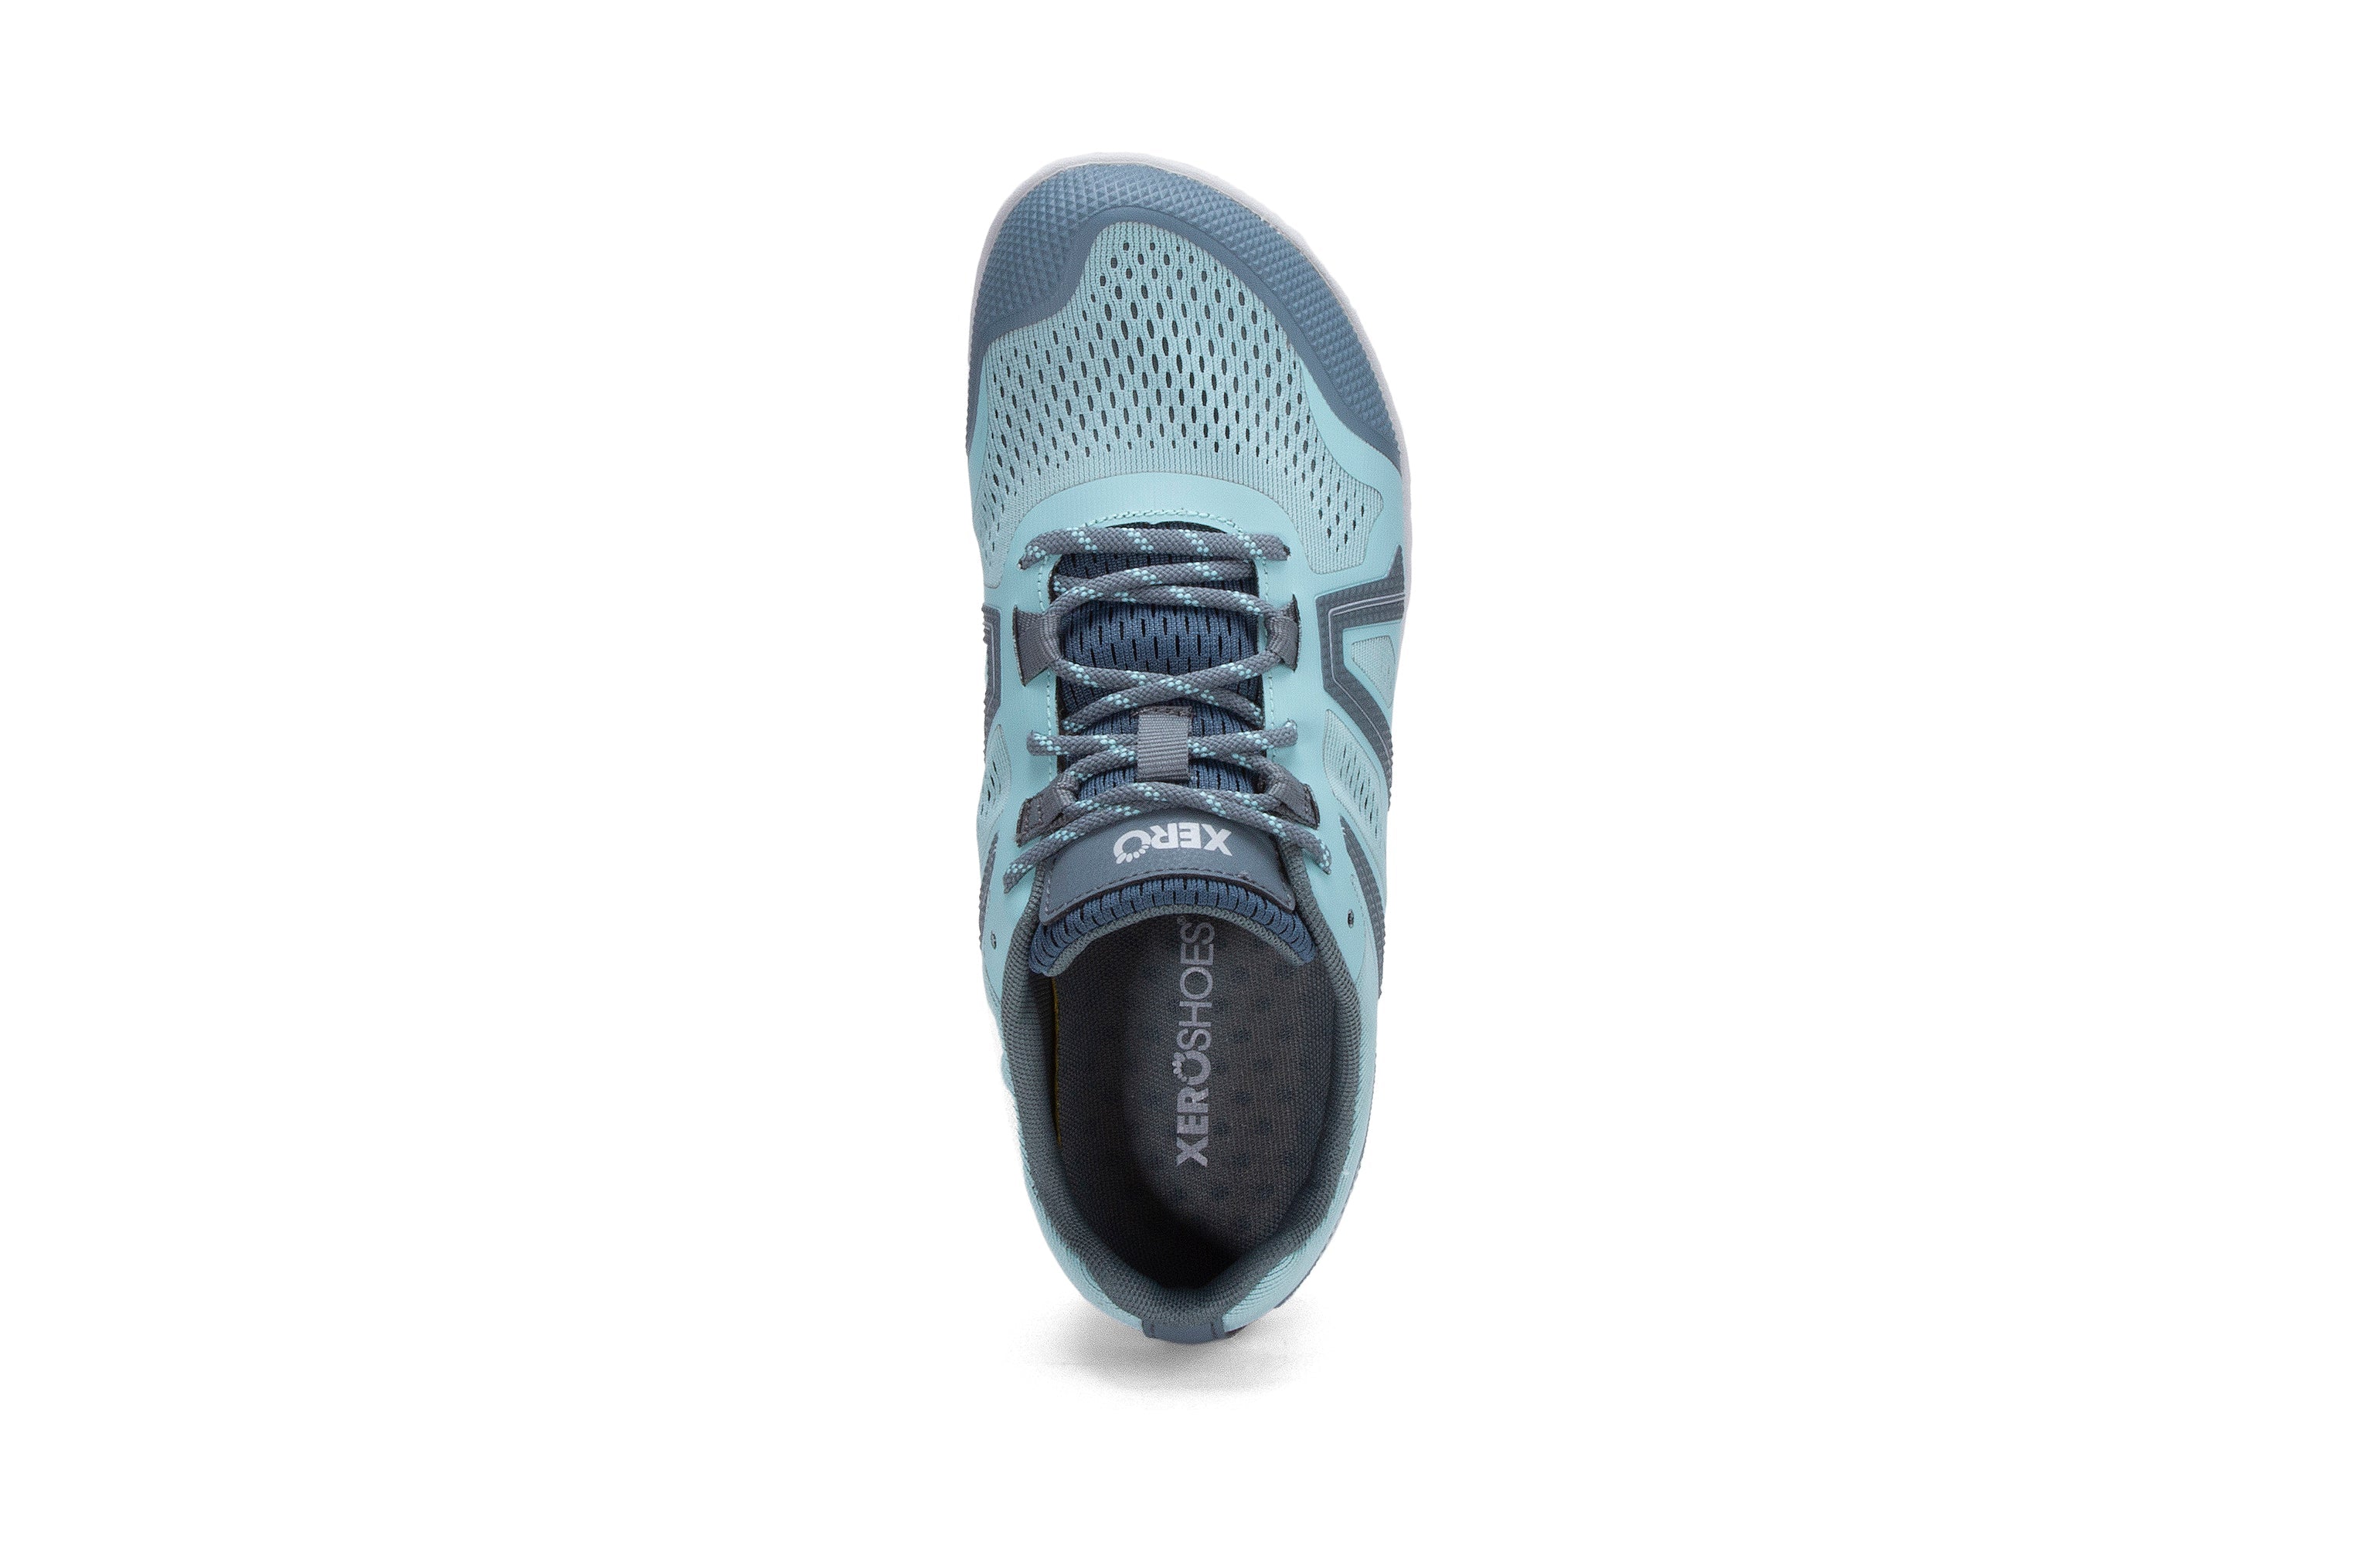 Xero Shoes Mesa Trail barfods trailsko til kvinder i farven turquoise, top